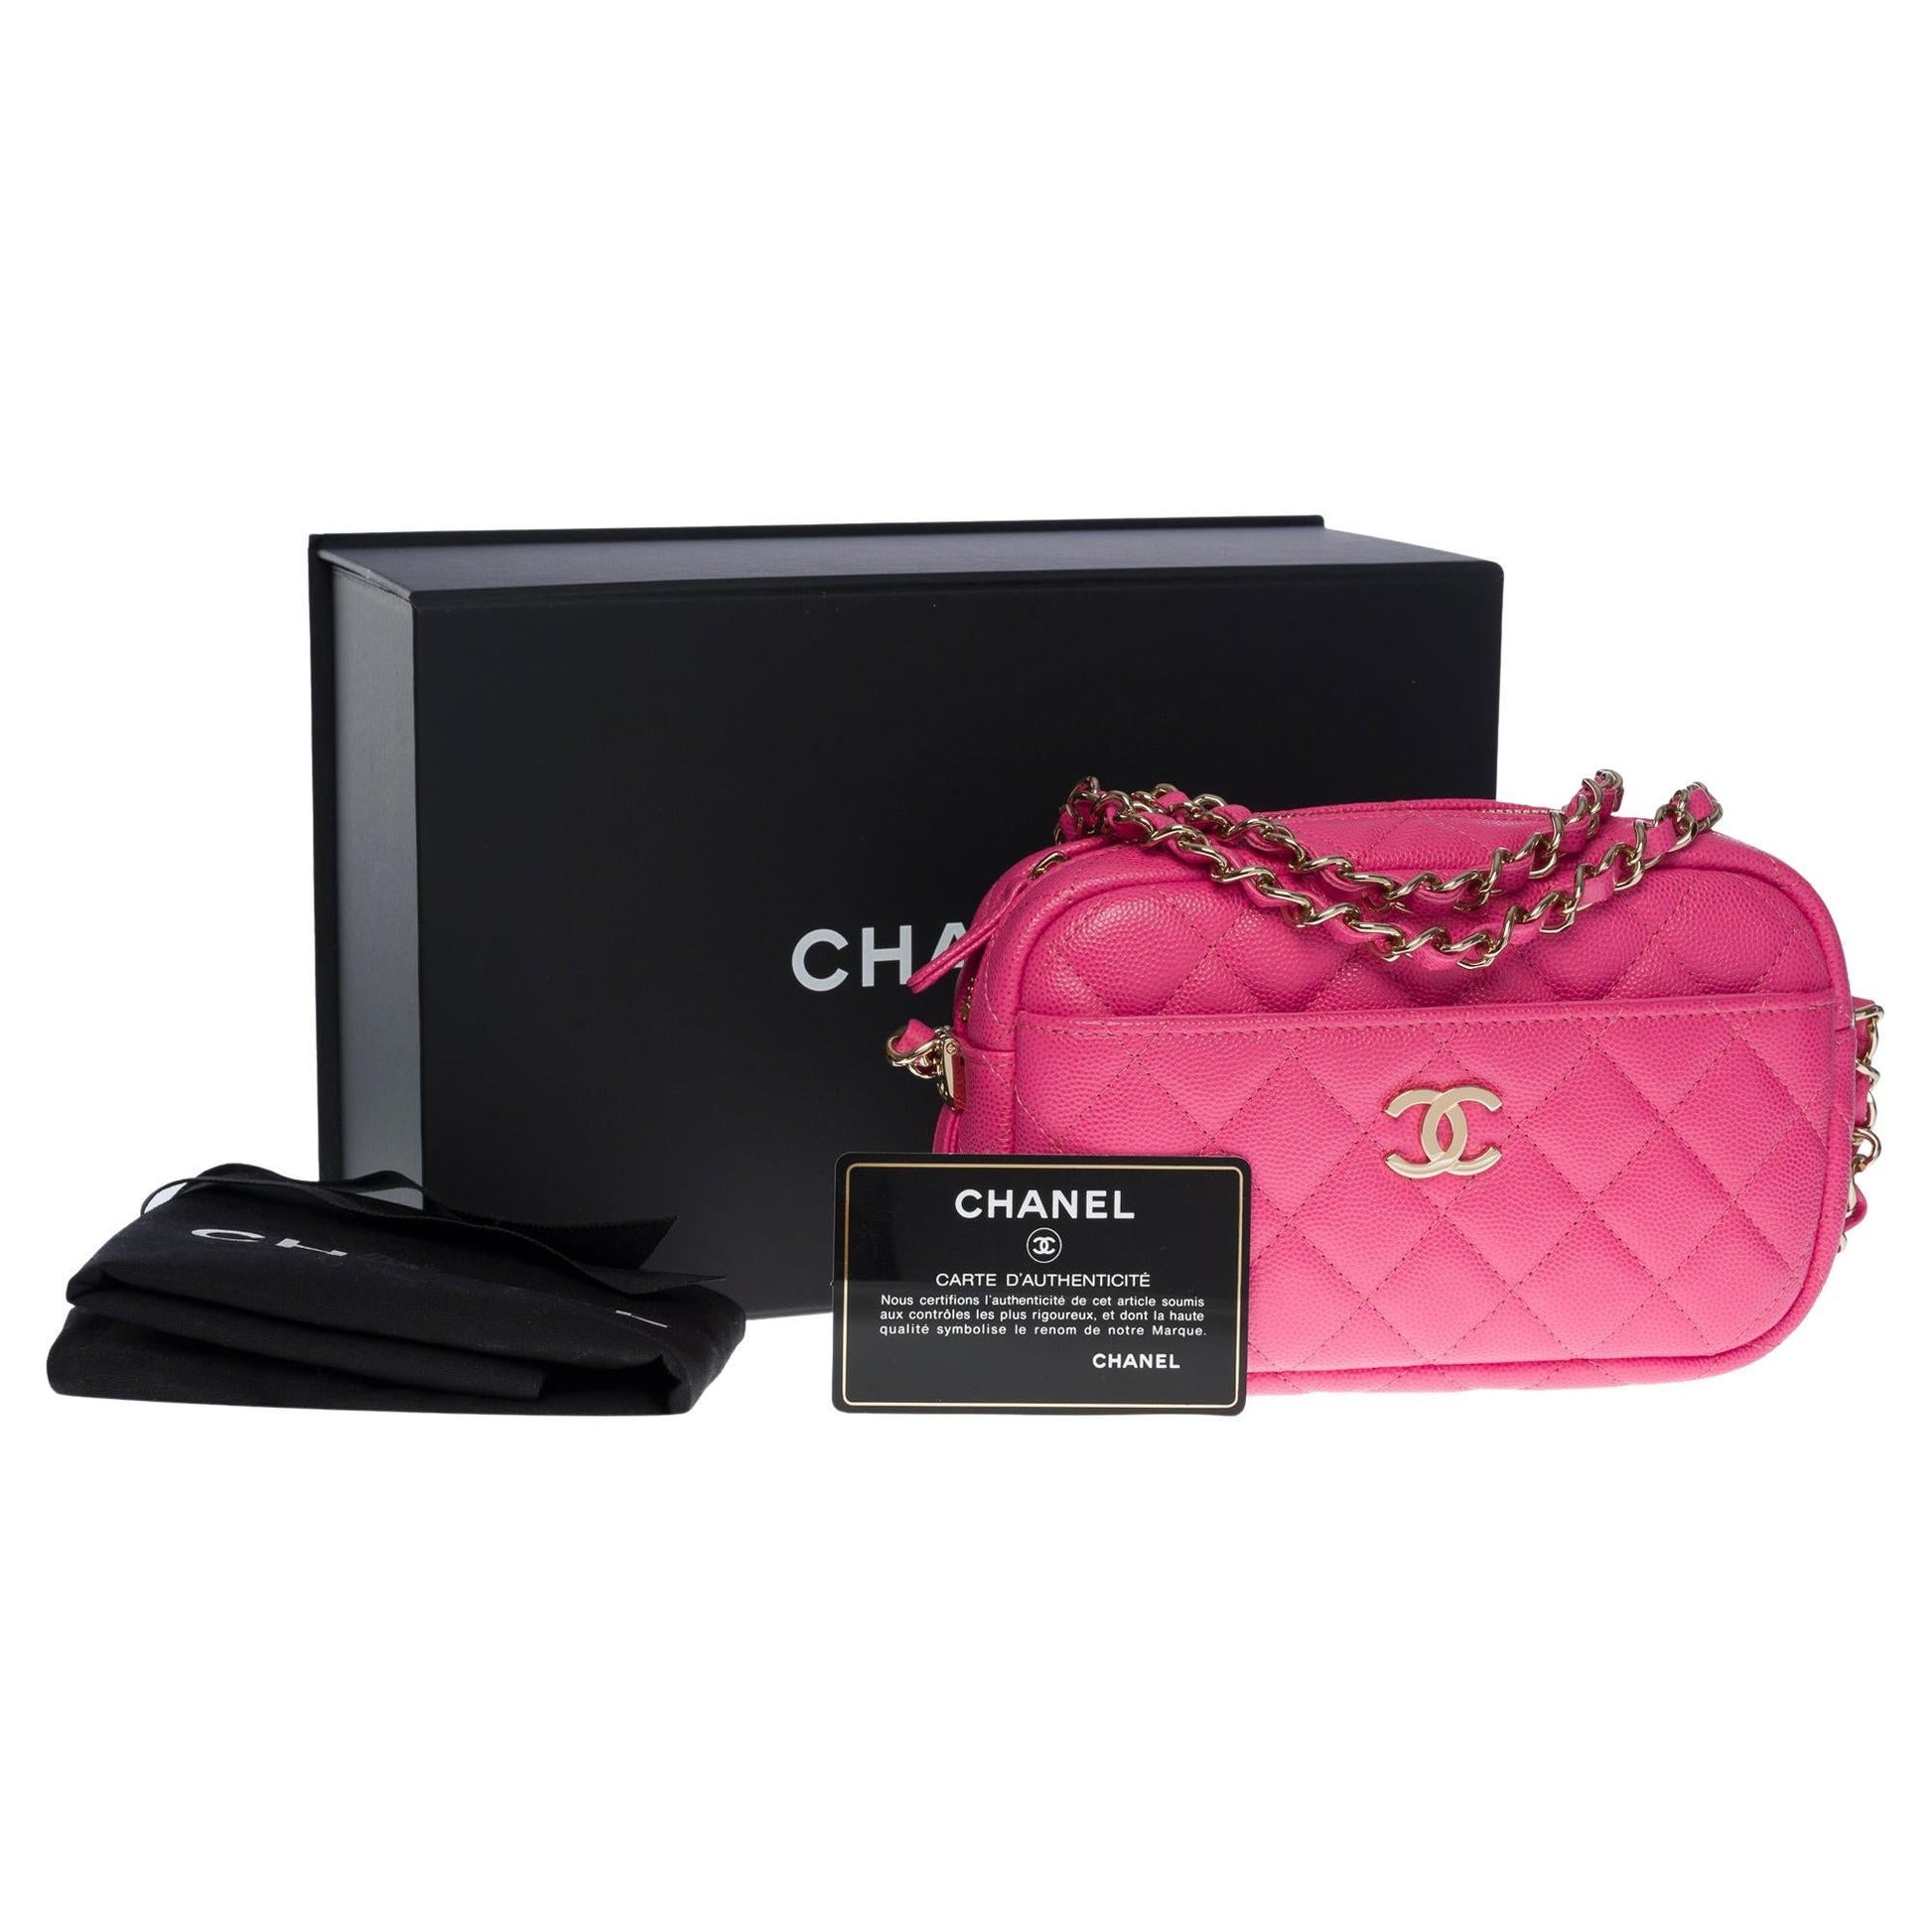 chanel perfume gift set for women